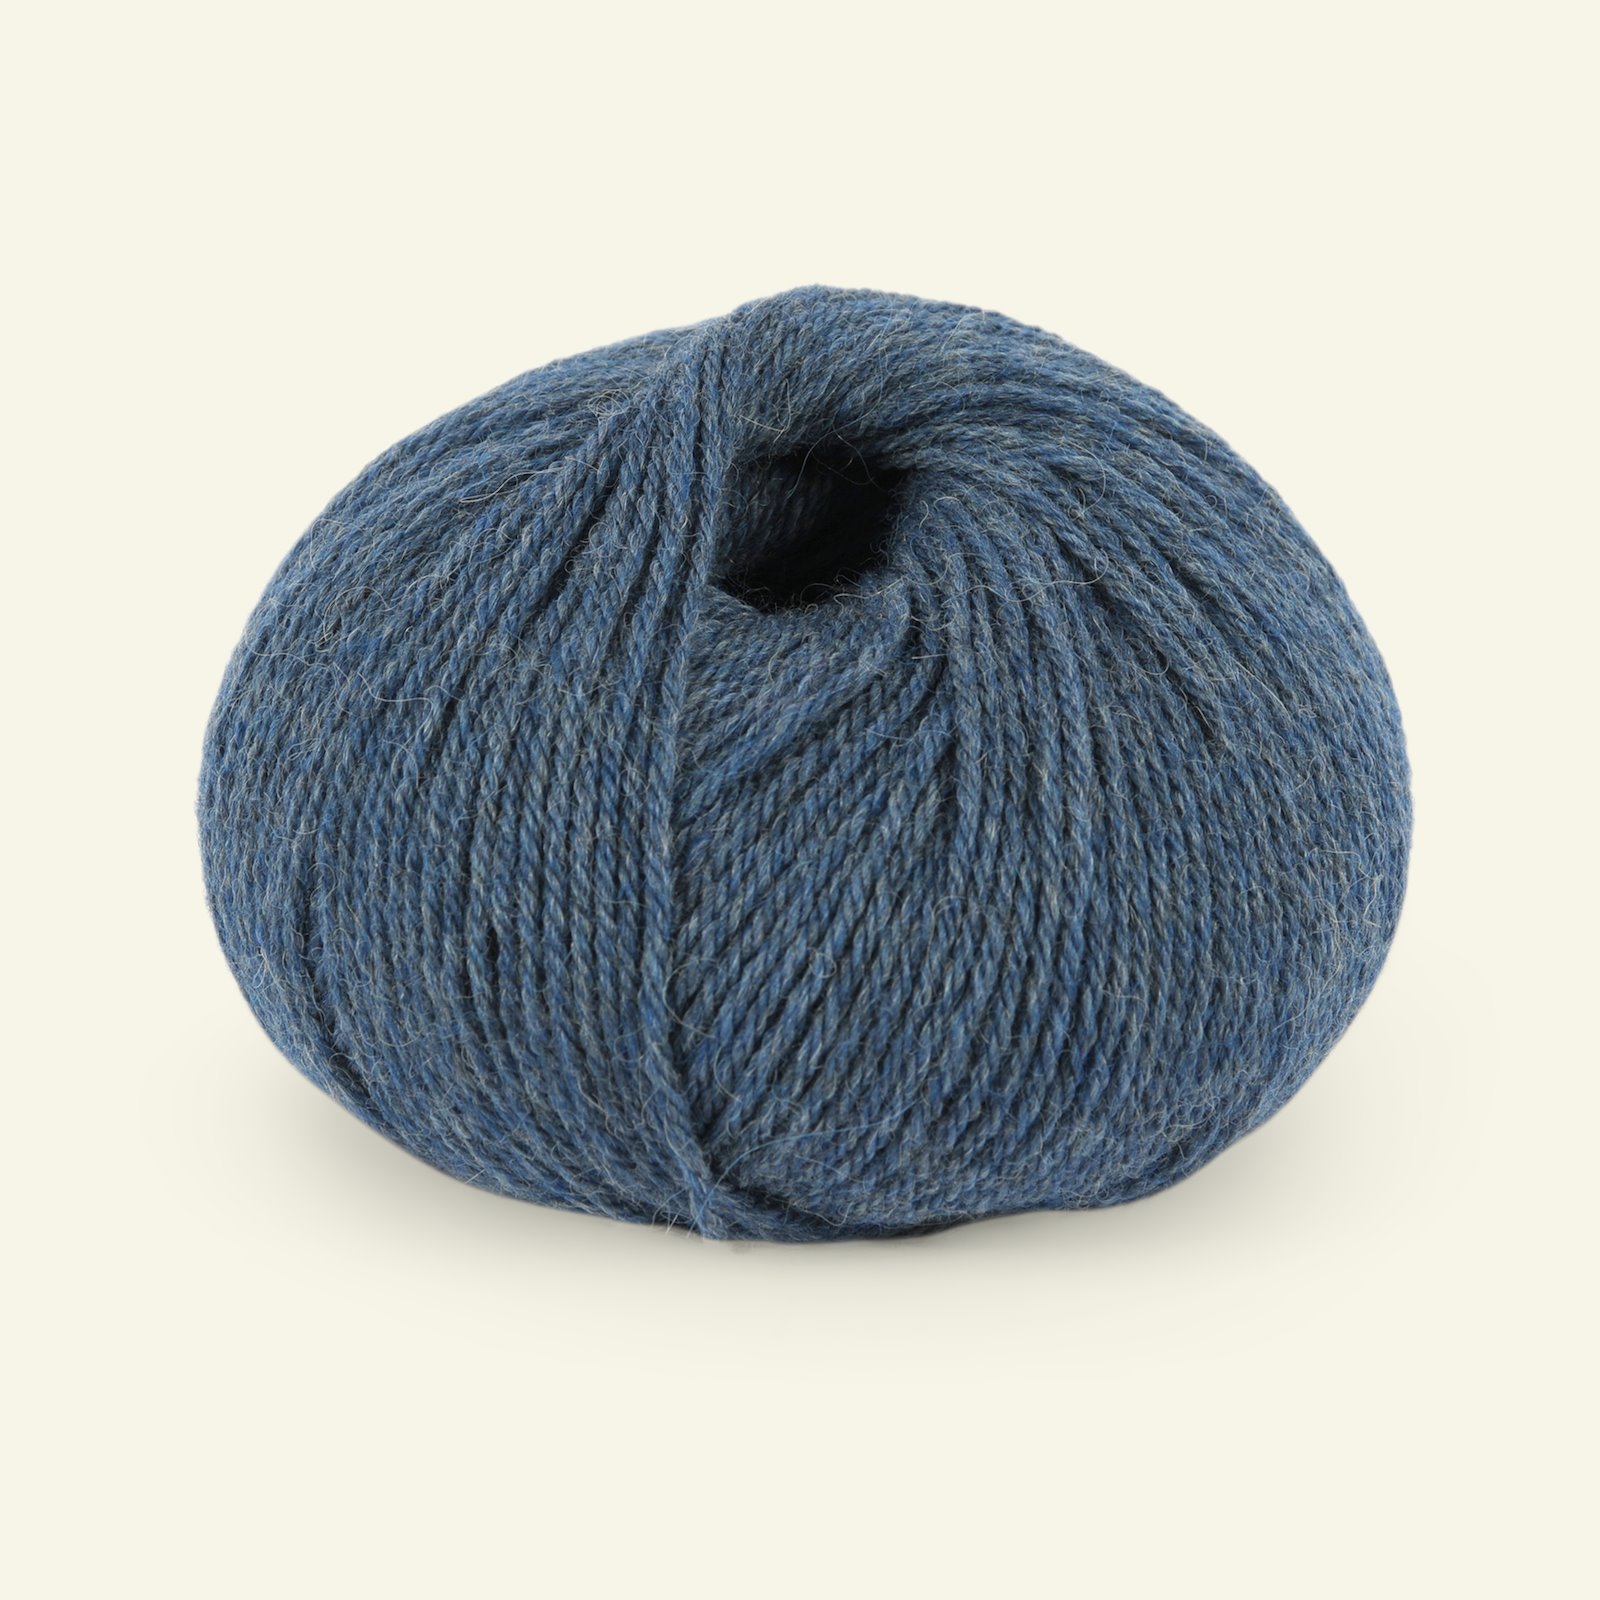 Du Store Alpakka, alpaca merino mixed yarn "Sterk", petroleum melange (885) 90000687_pack_b